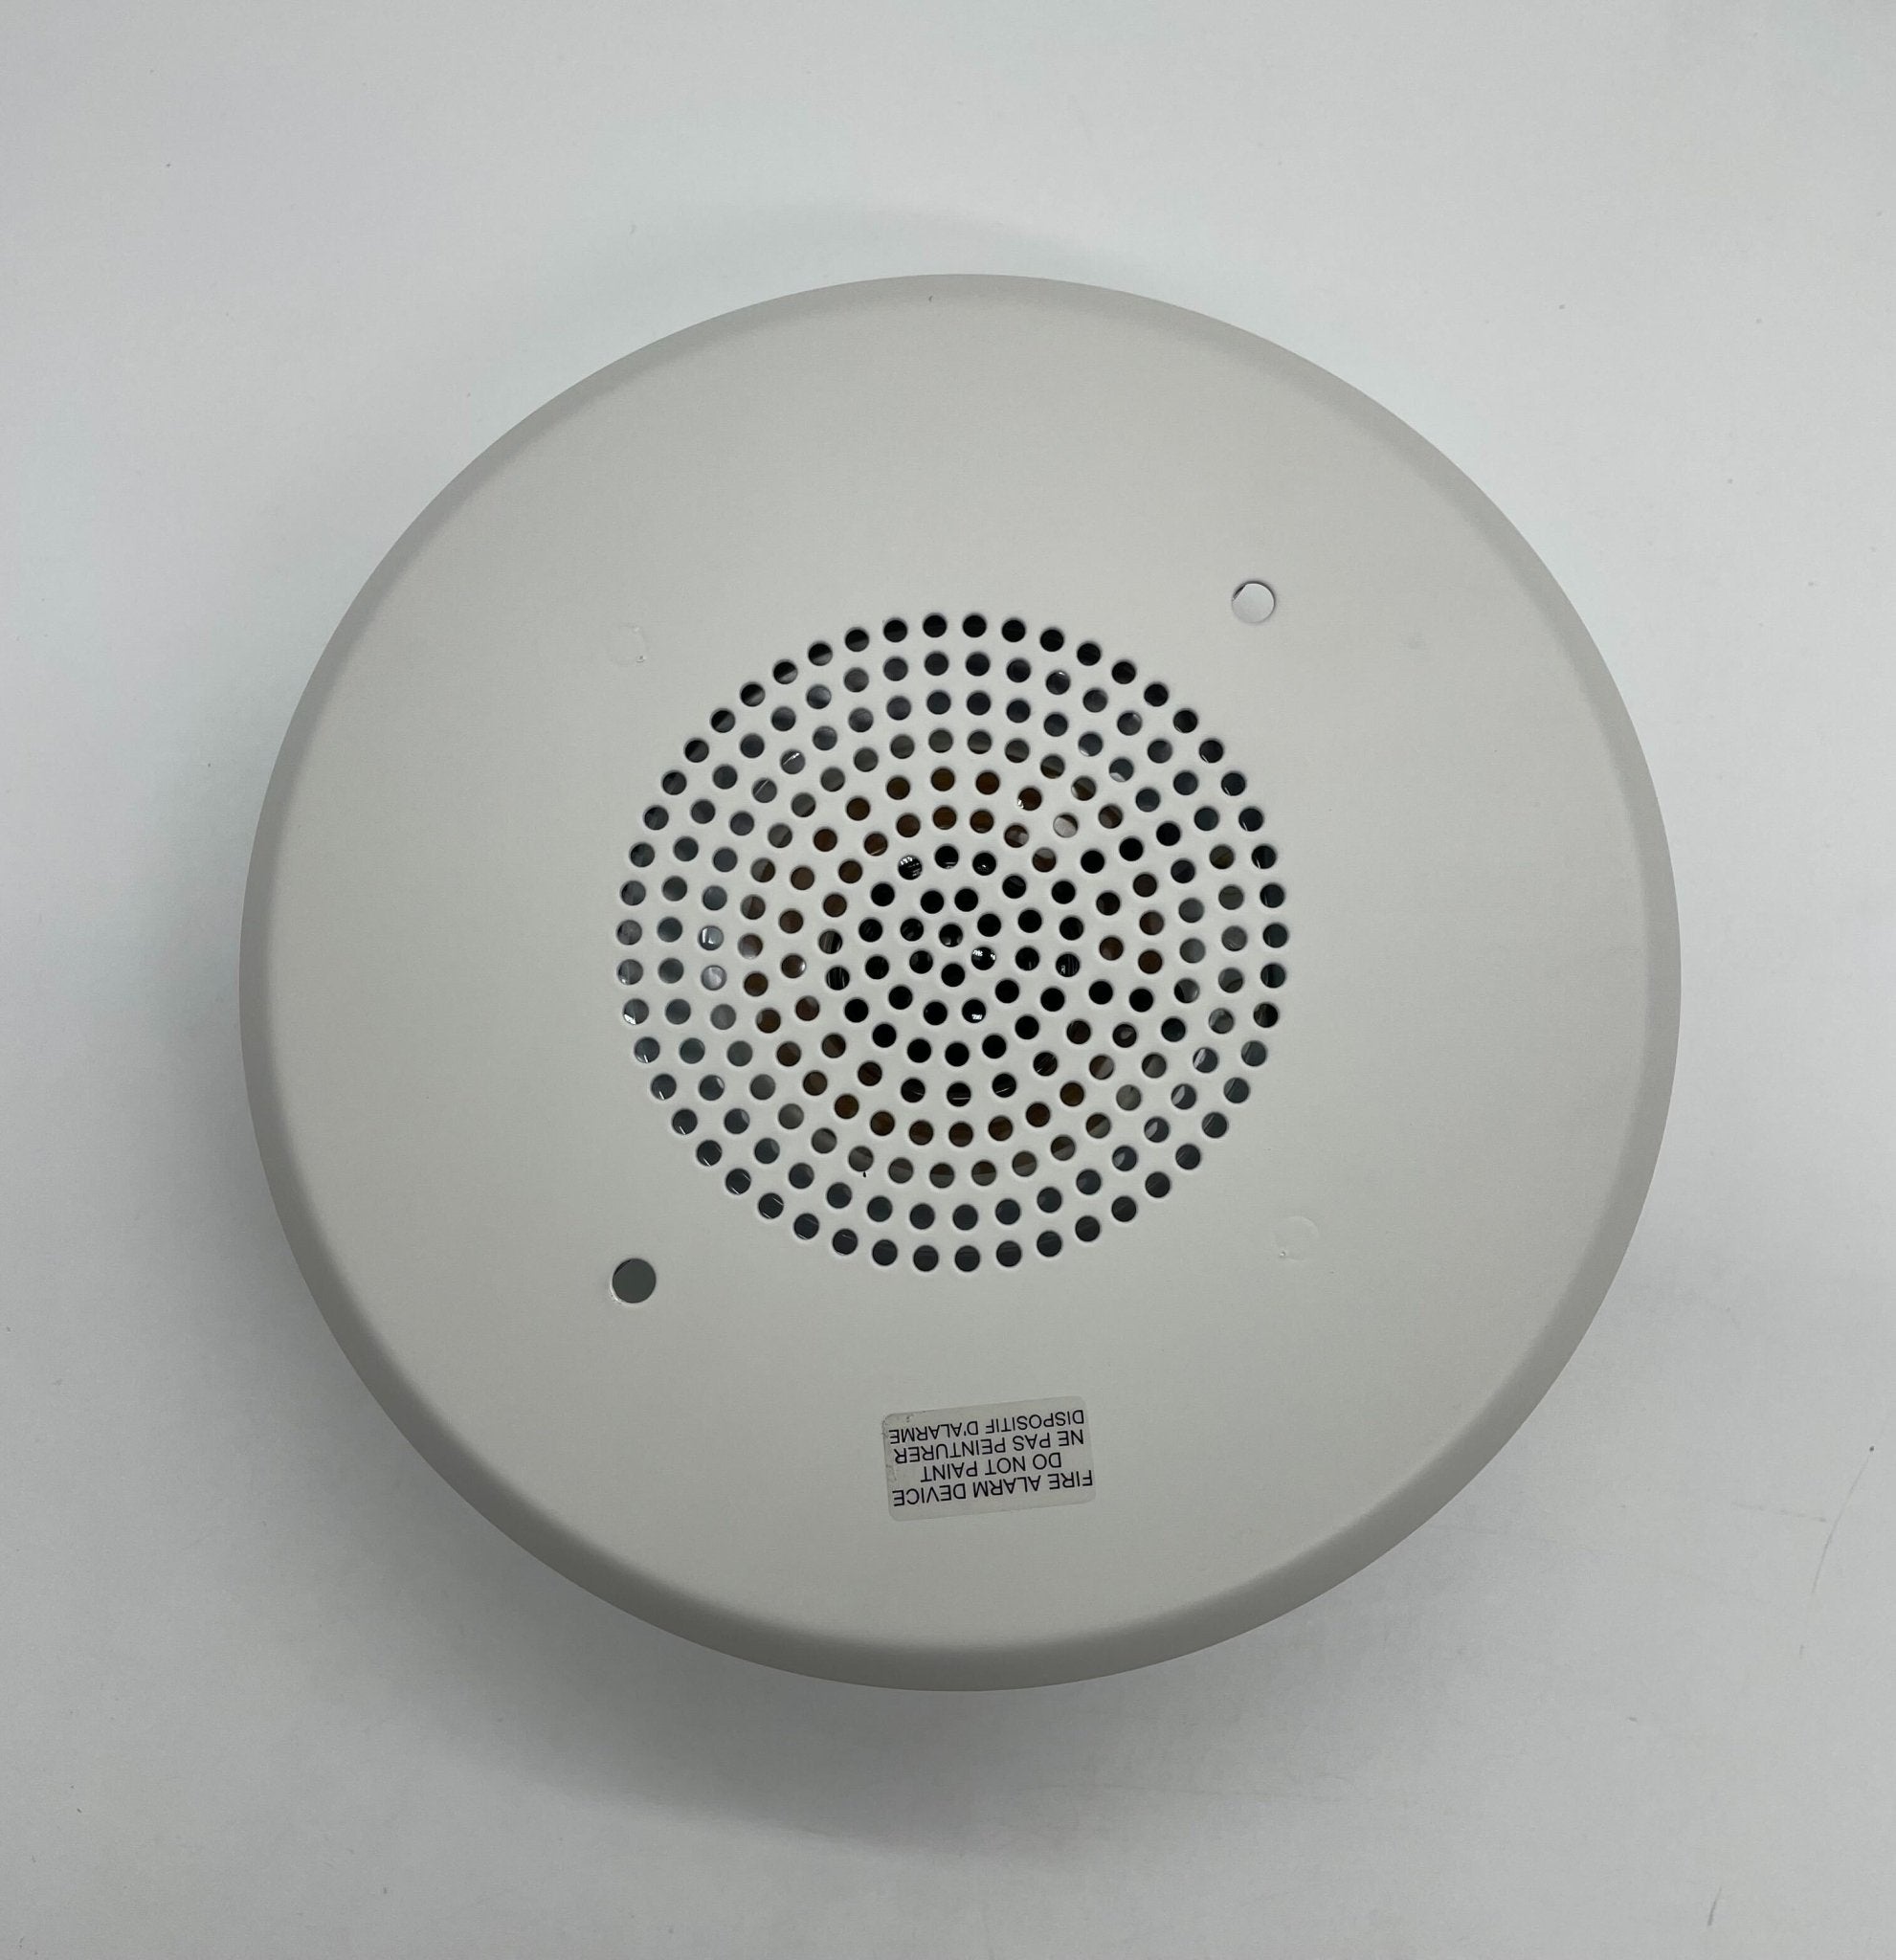 Edwards 964-1A-4RW - The Fire Alarm Supplier